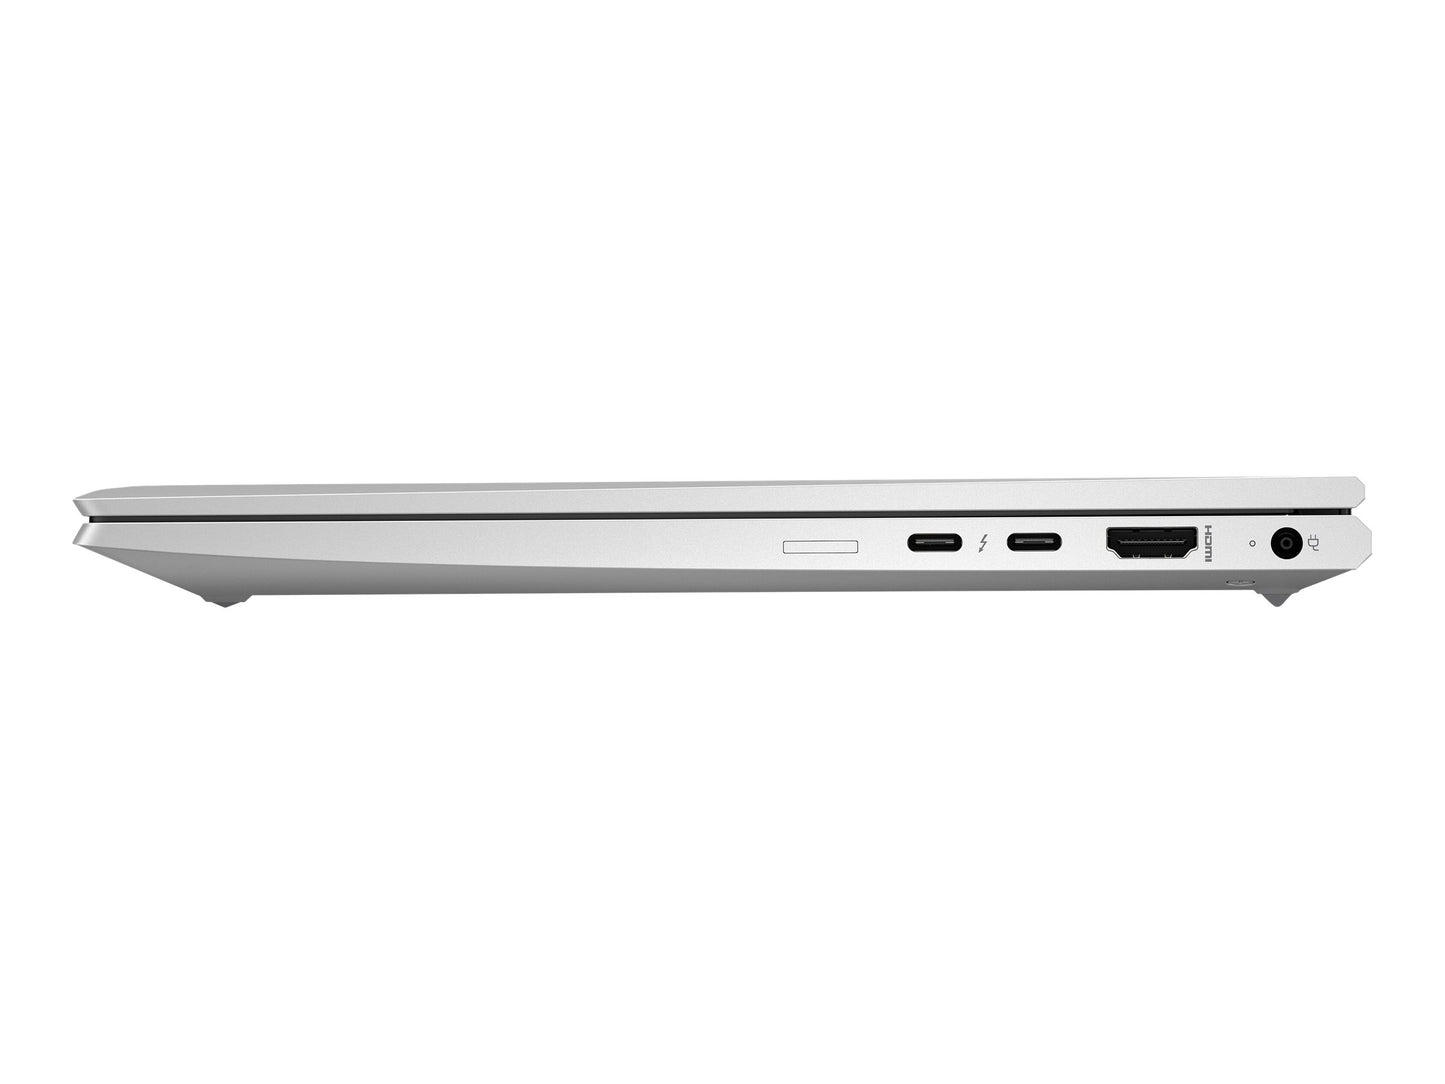 HP EliteBook 830 G7 Notebook PC- 13.3" FullHD Display - Intel Core I7-10610U 16GB RAM 256GB NVMe - Windows 10